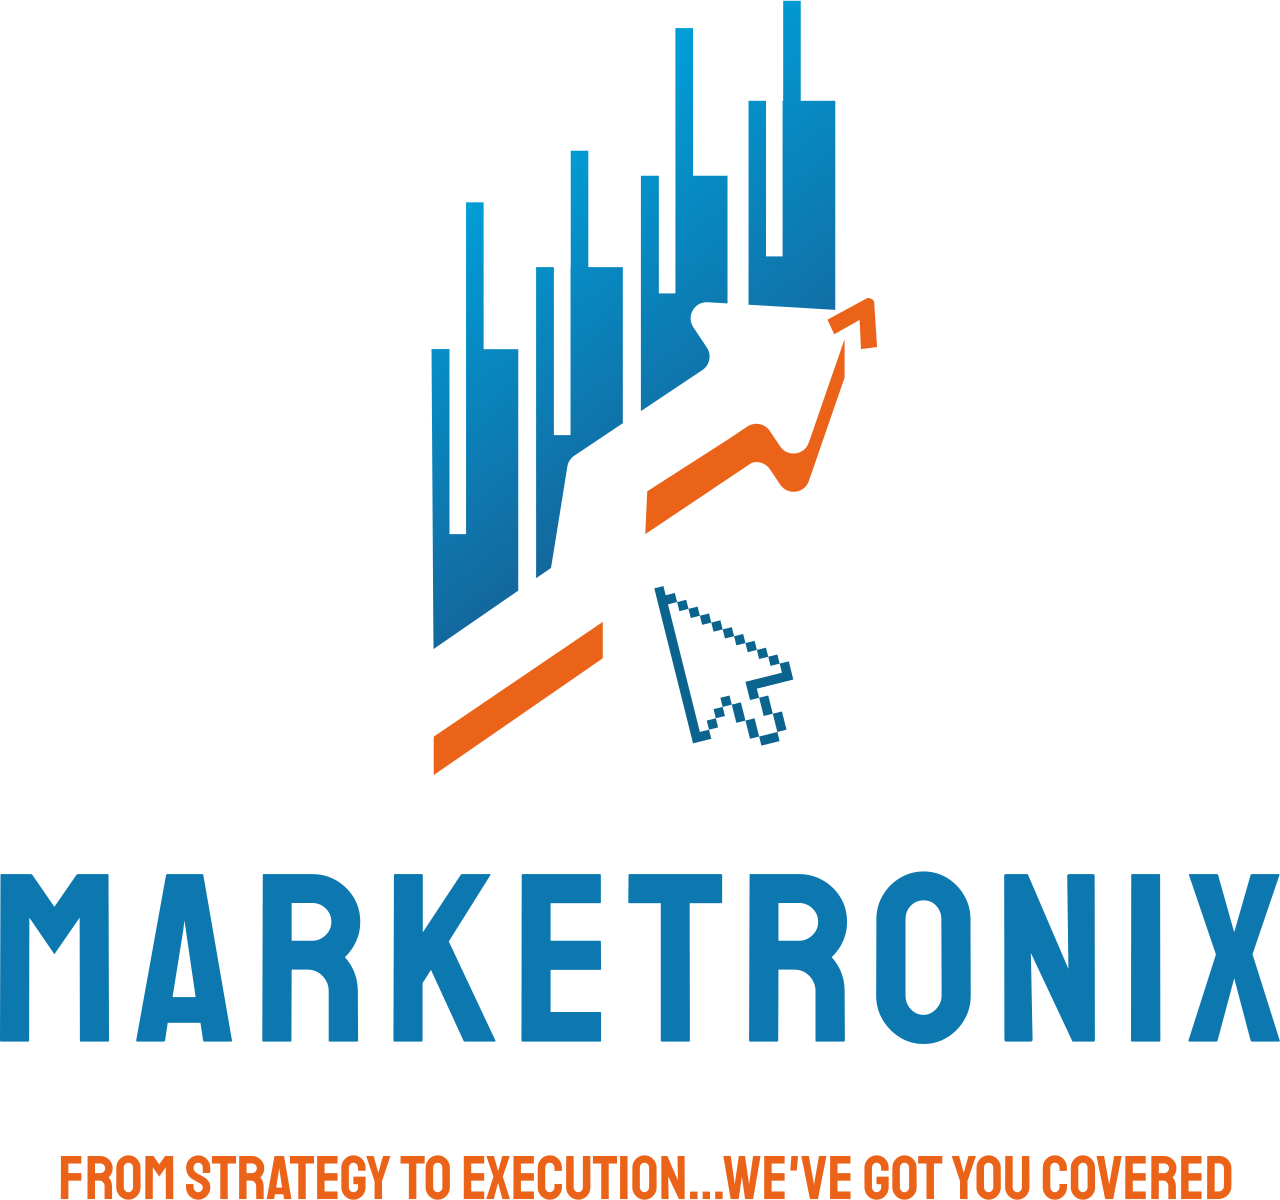 Marketronix's web page